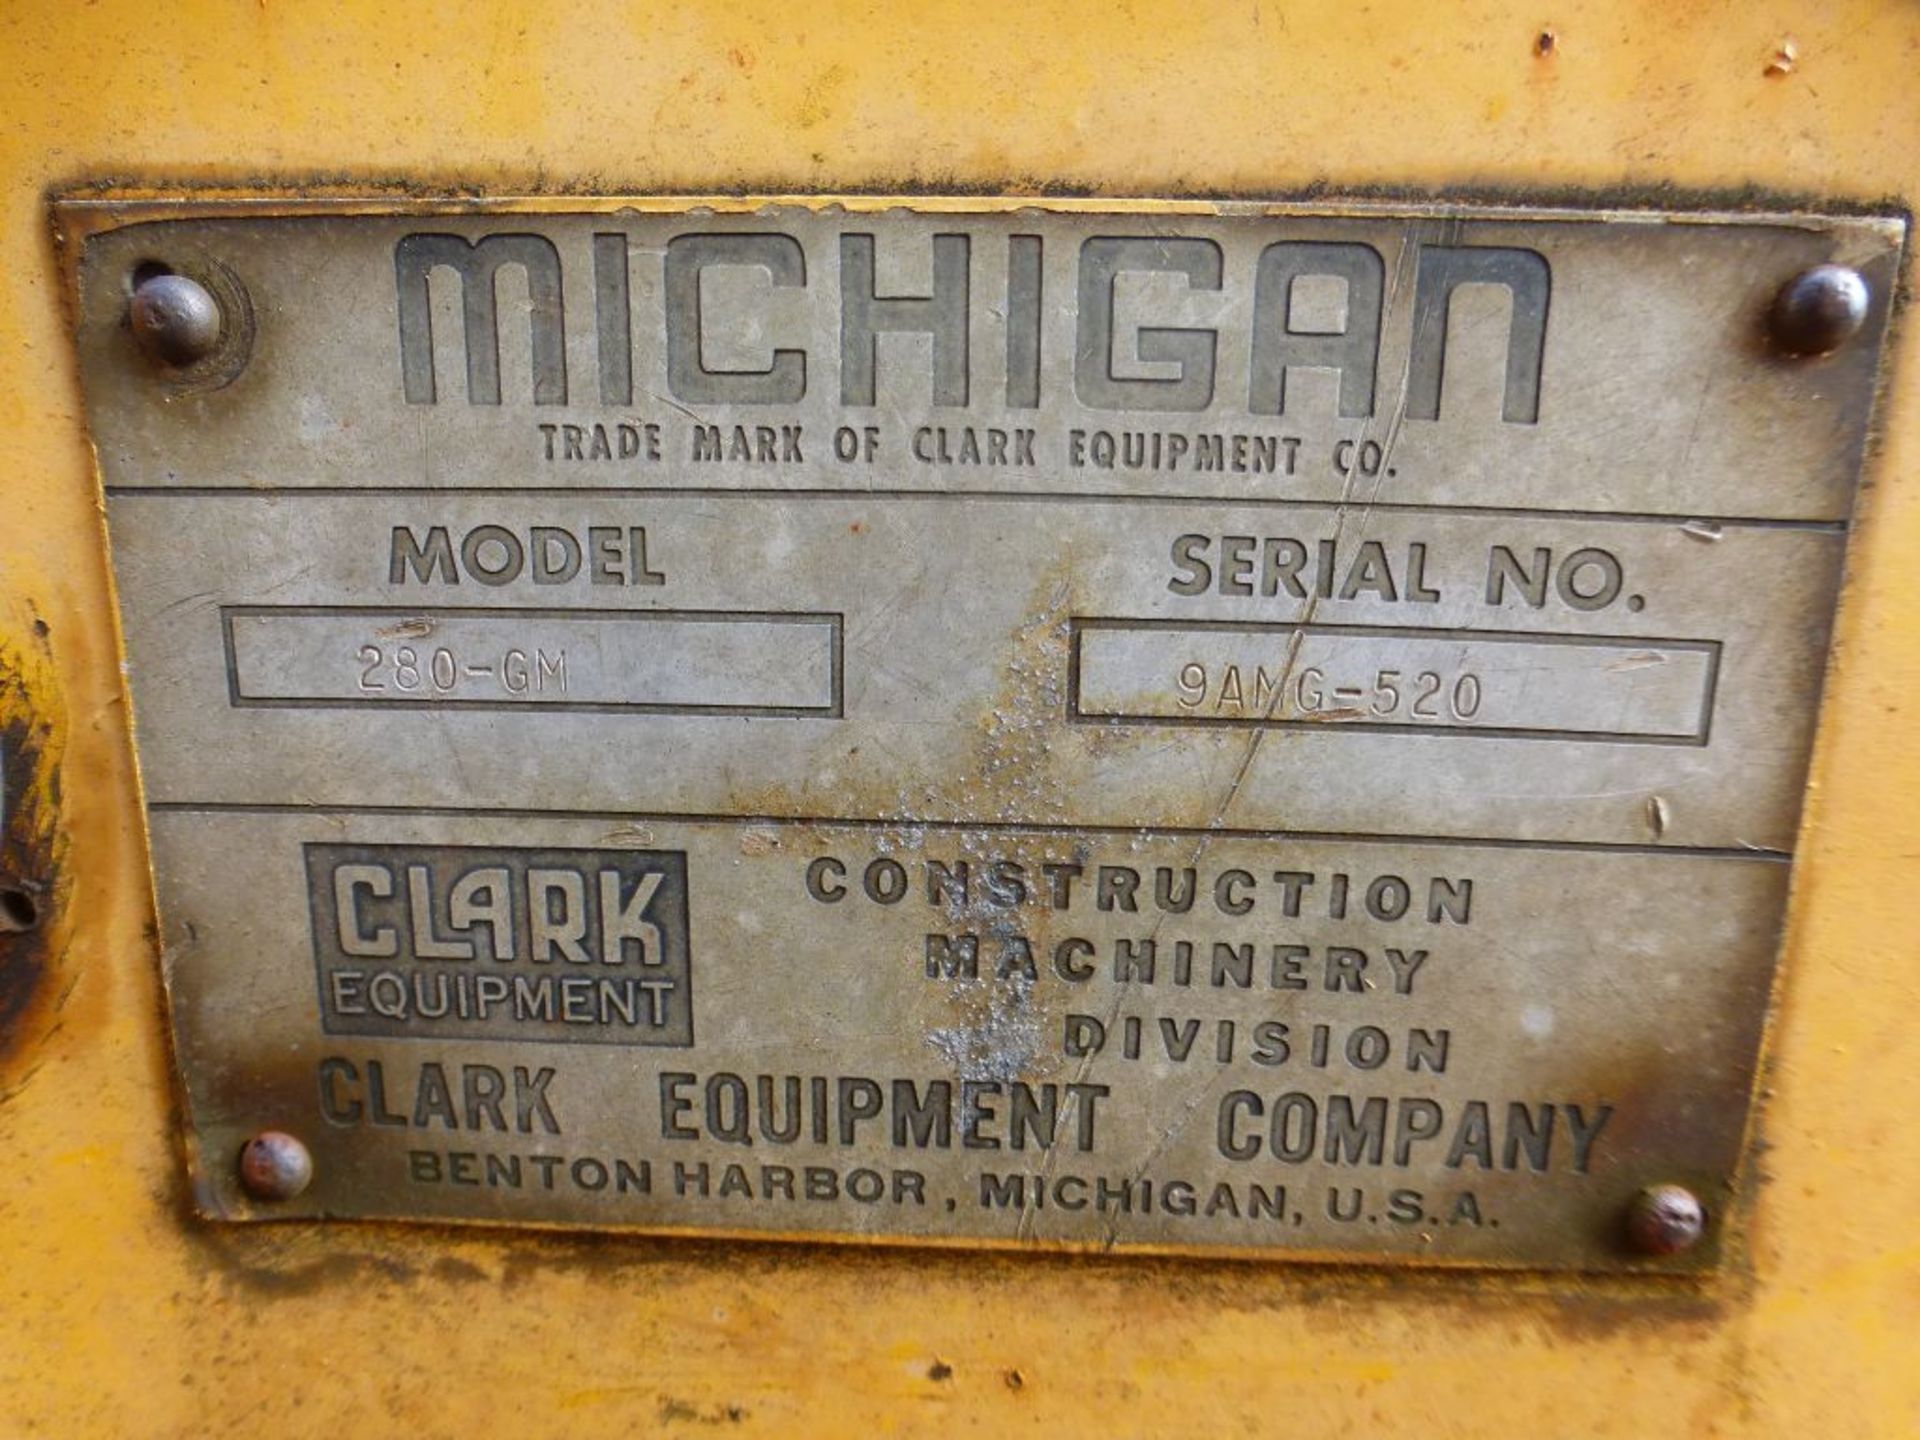 Clark 280-74078 Loader | Model No. 280-GM; Serial No. 9AMG-520; 1522 Hours; 16' Blade; Manual - Image 21 of 23